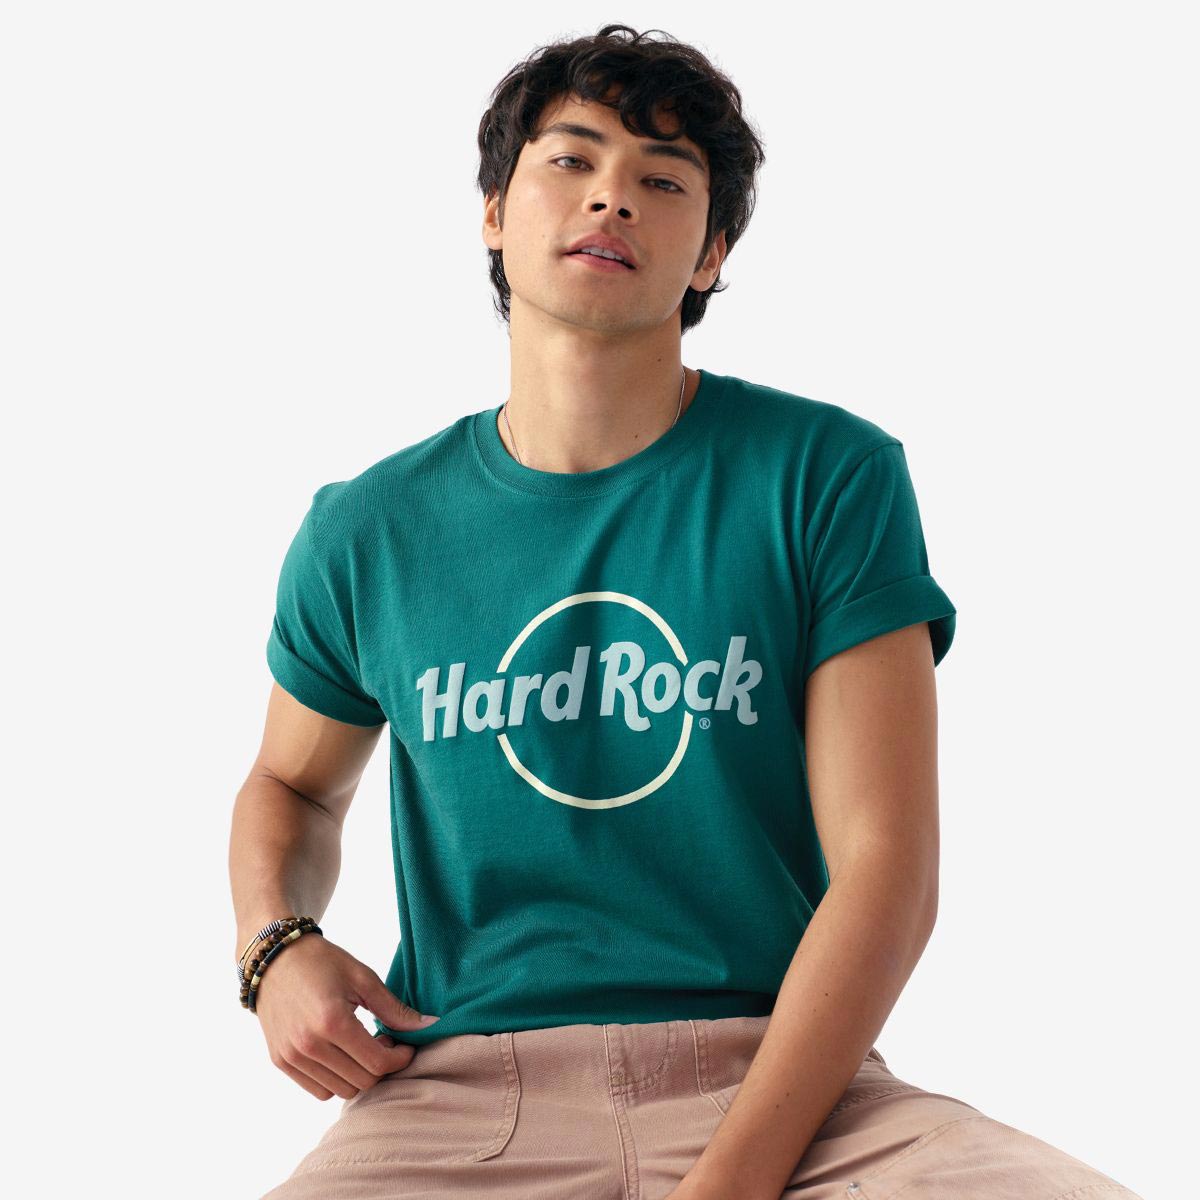 Hard Rock Adult Fit Pop of Color Tee in Deep Teal Green image number 1